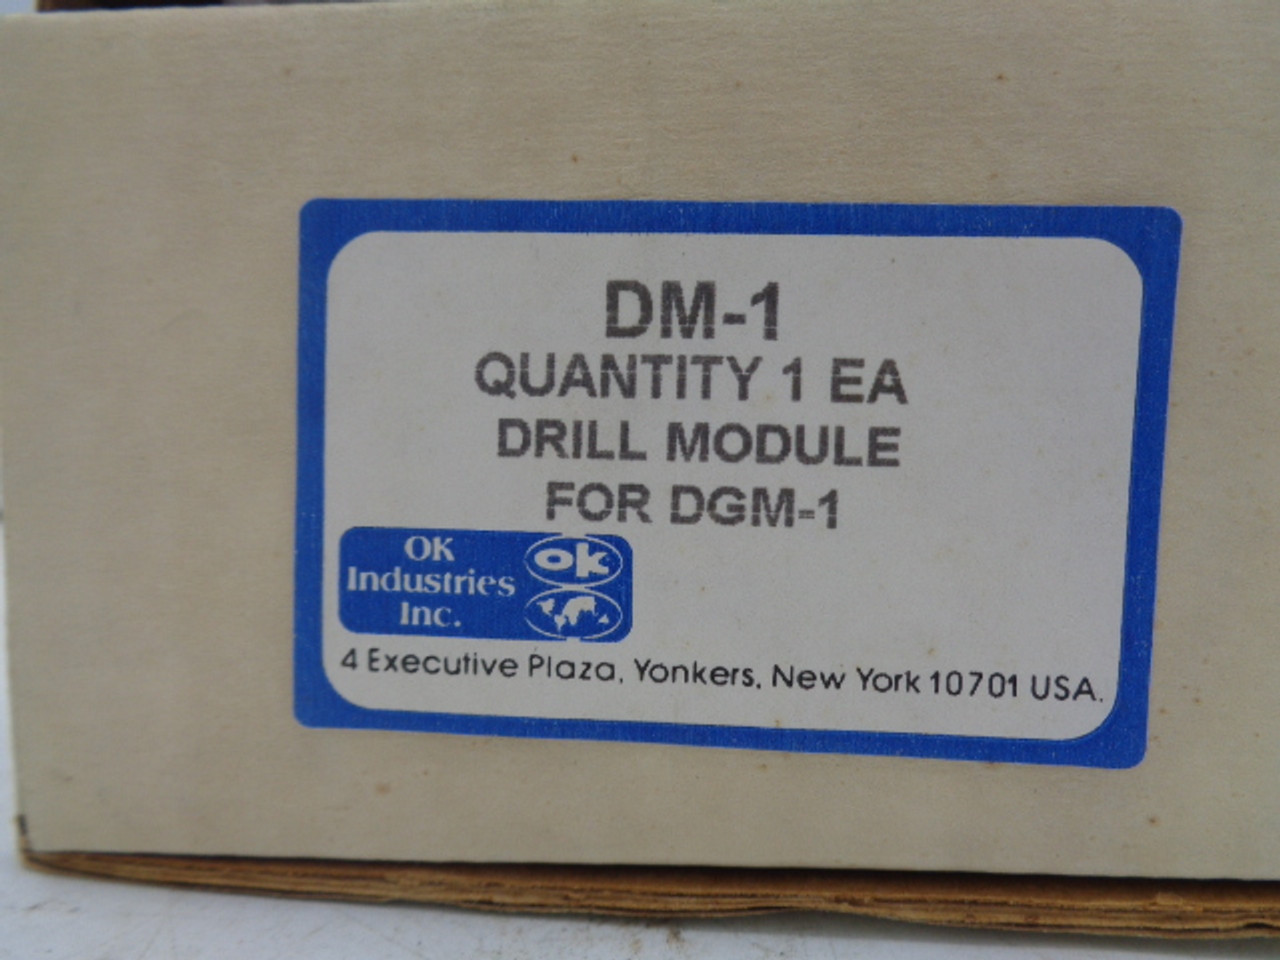 OK Industries DM-1 Drill Module